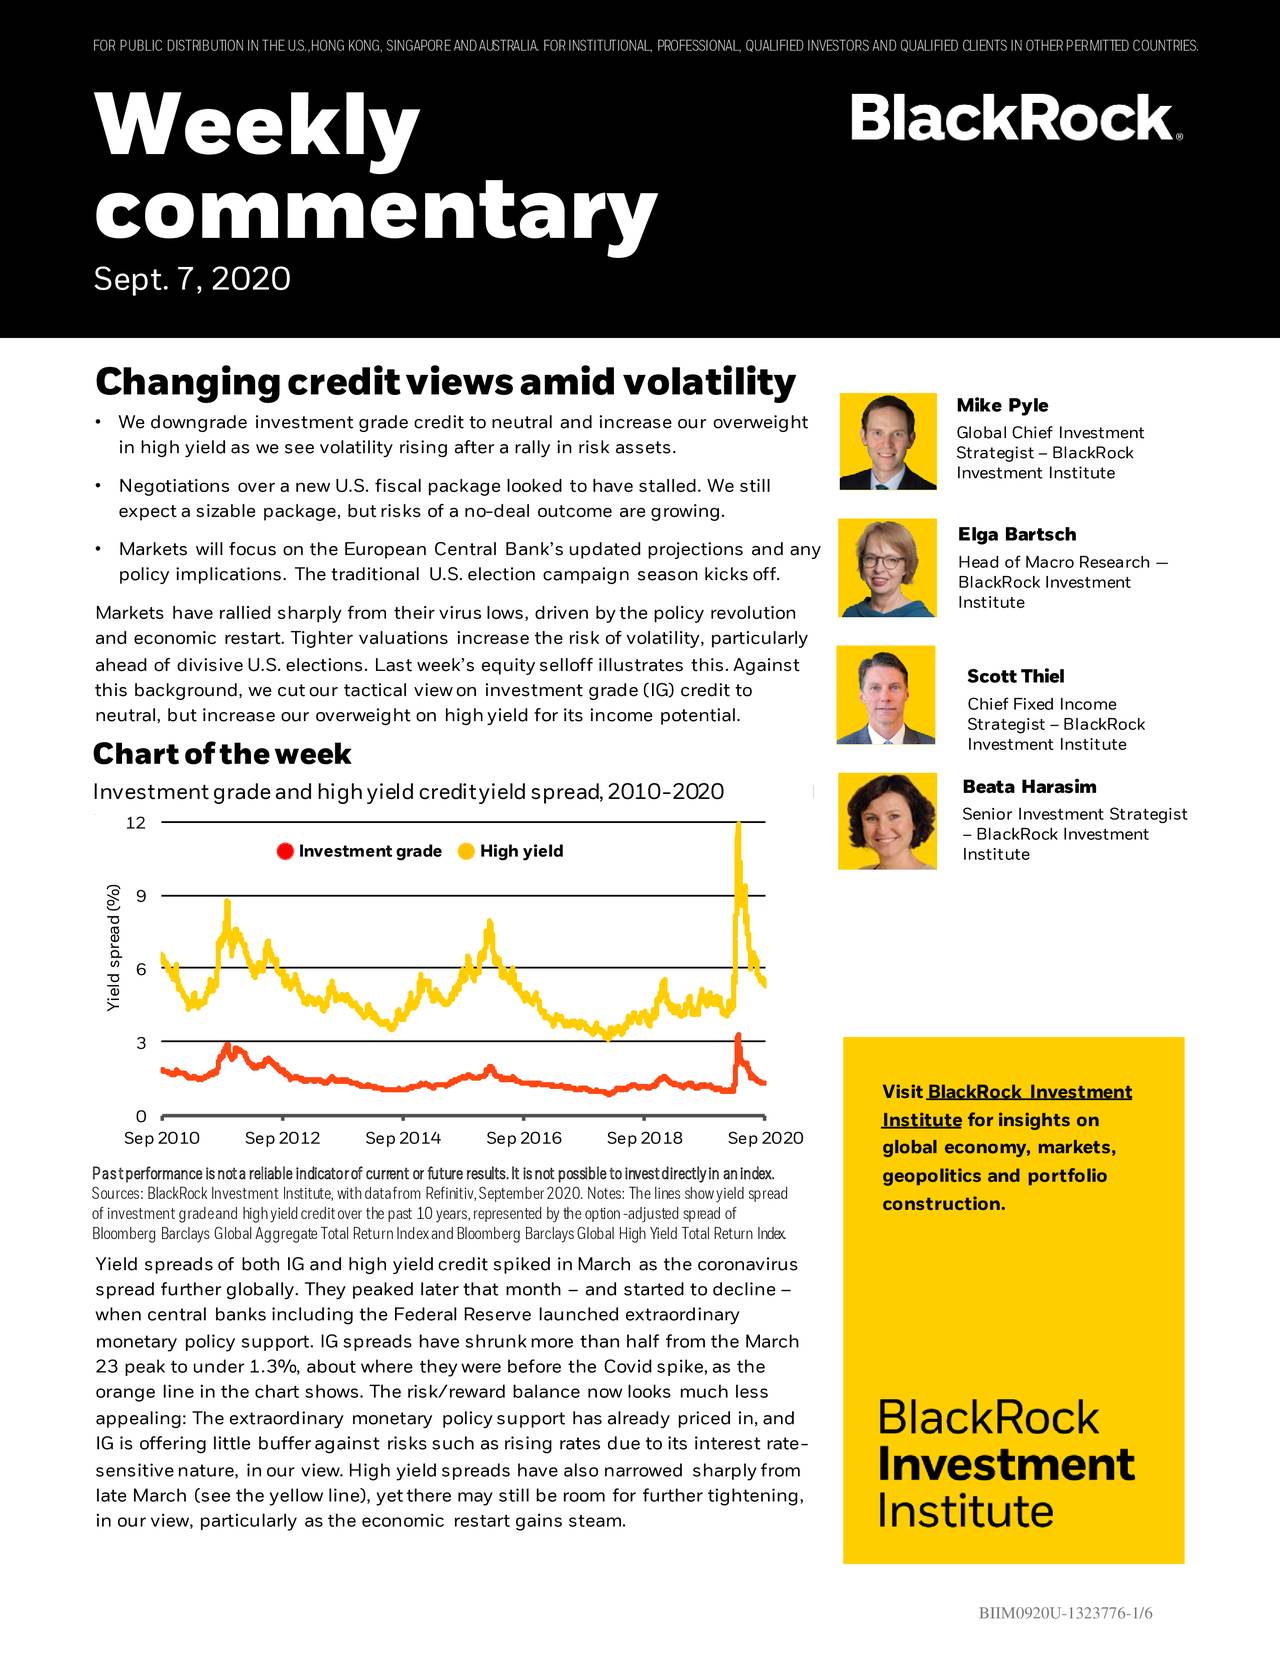 Changing Credit Views Amid Volatility